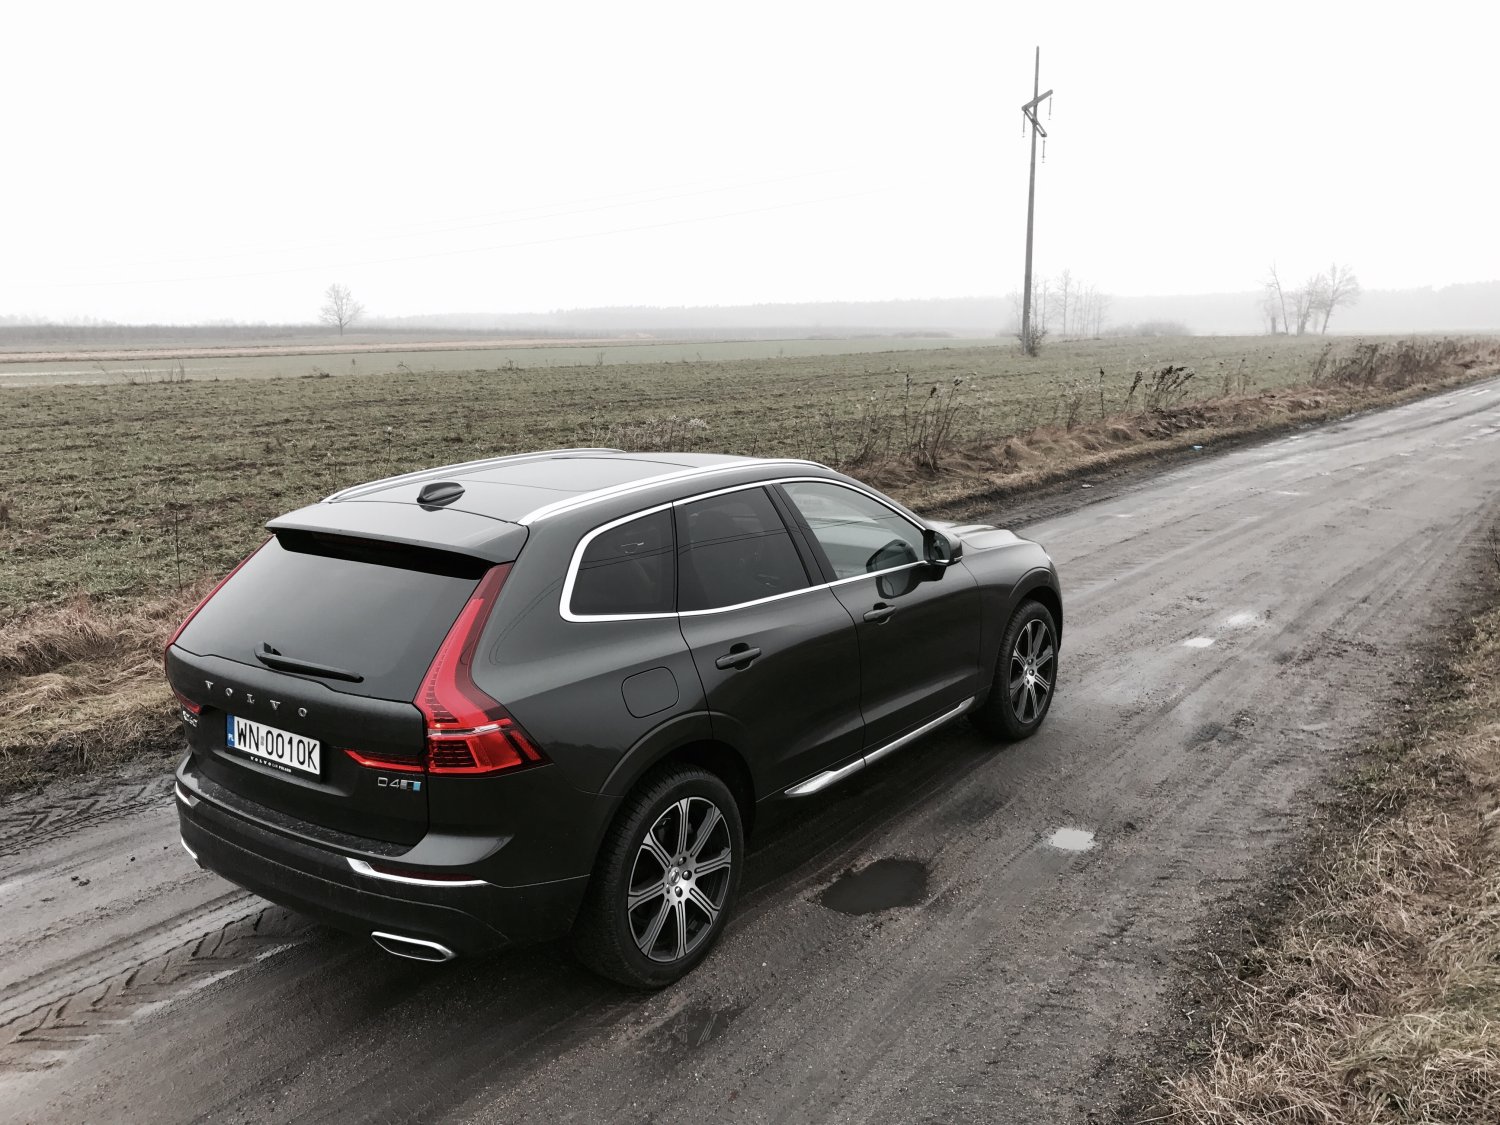 Volvo Xc60. Środek Na Uspokojenie | Natemat.pl